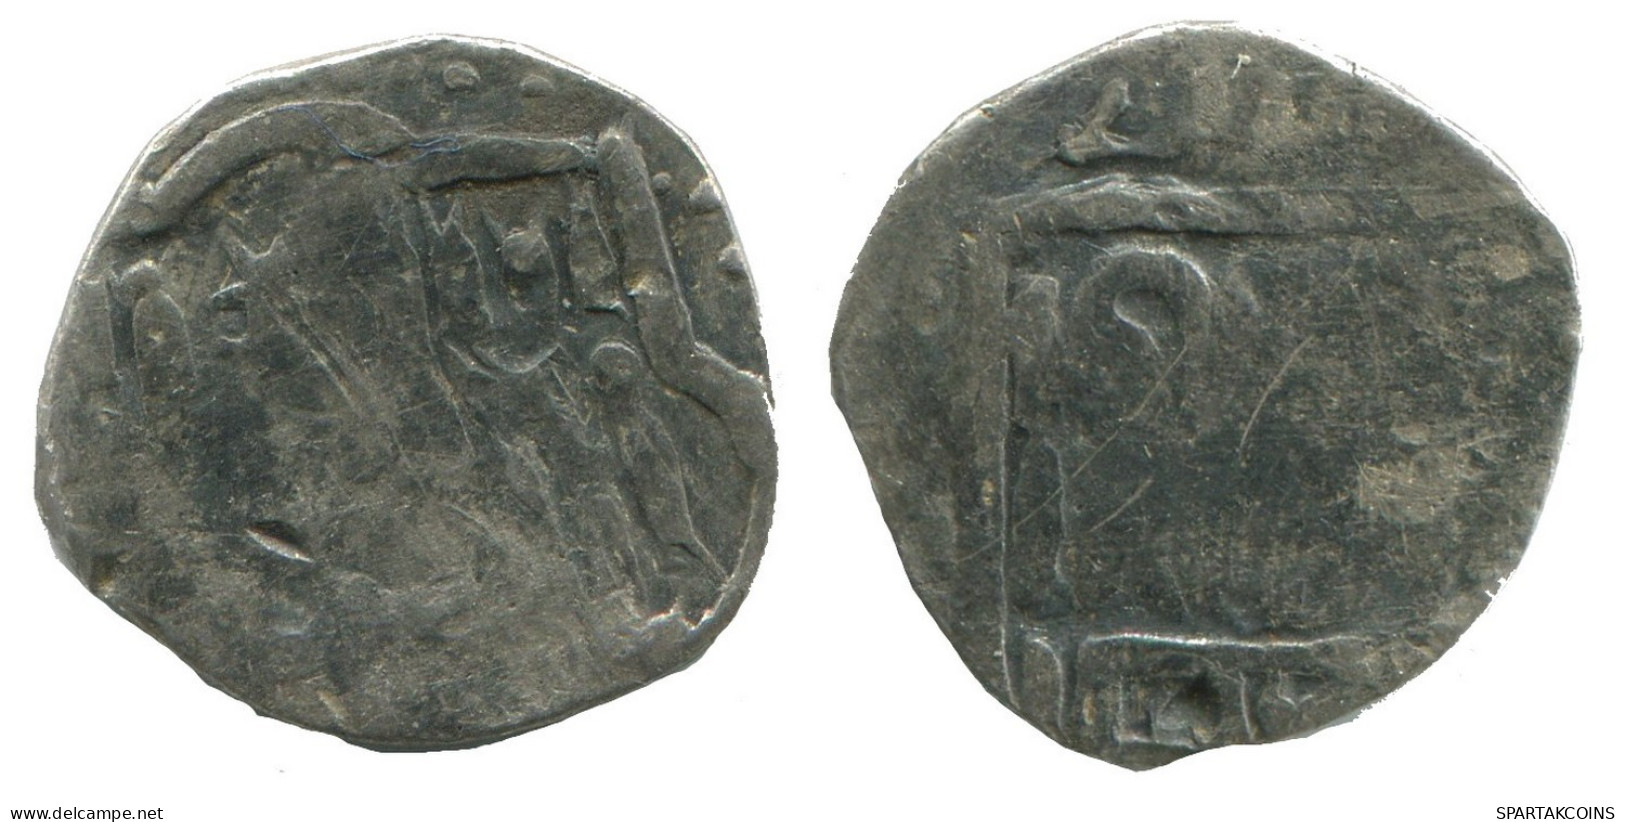 GOLDEN HORDE Silver Dirham Medieval Islamic Coin 1.1g/14mm #NNN2030.8.U.A - Islamitisch